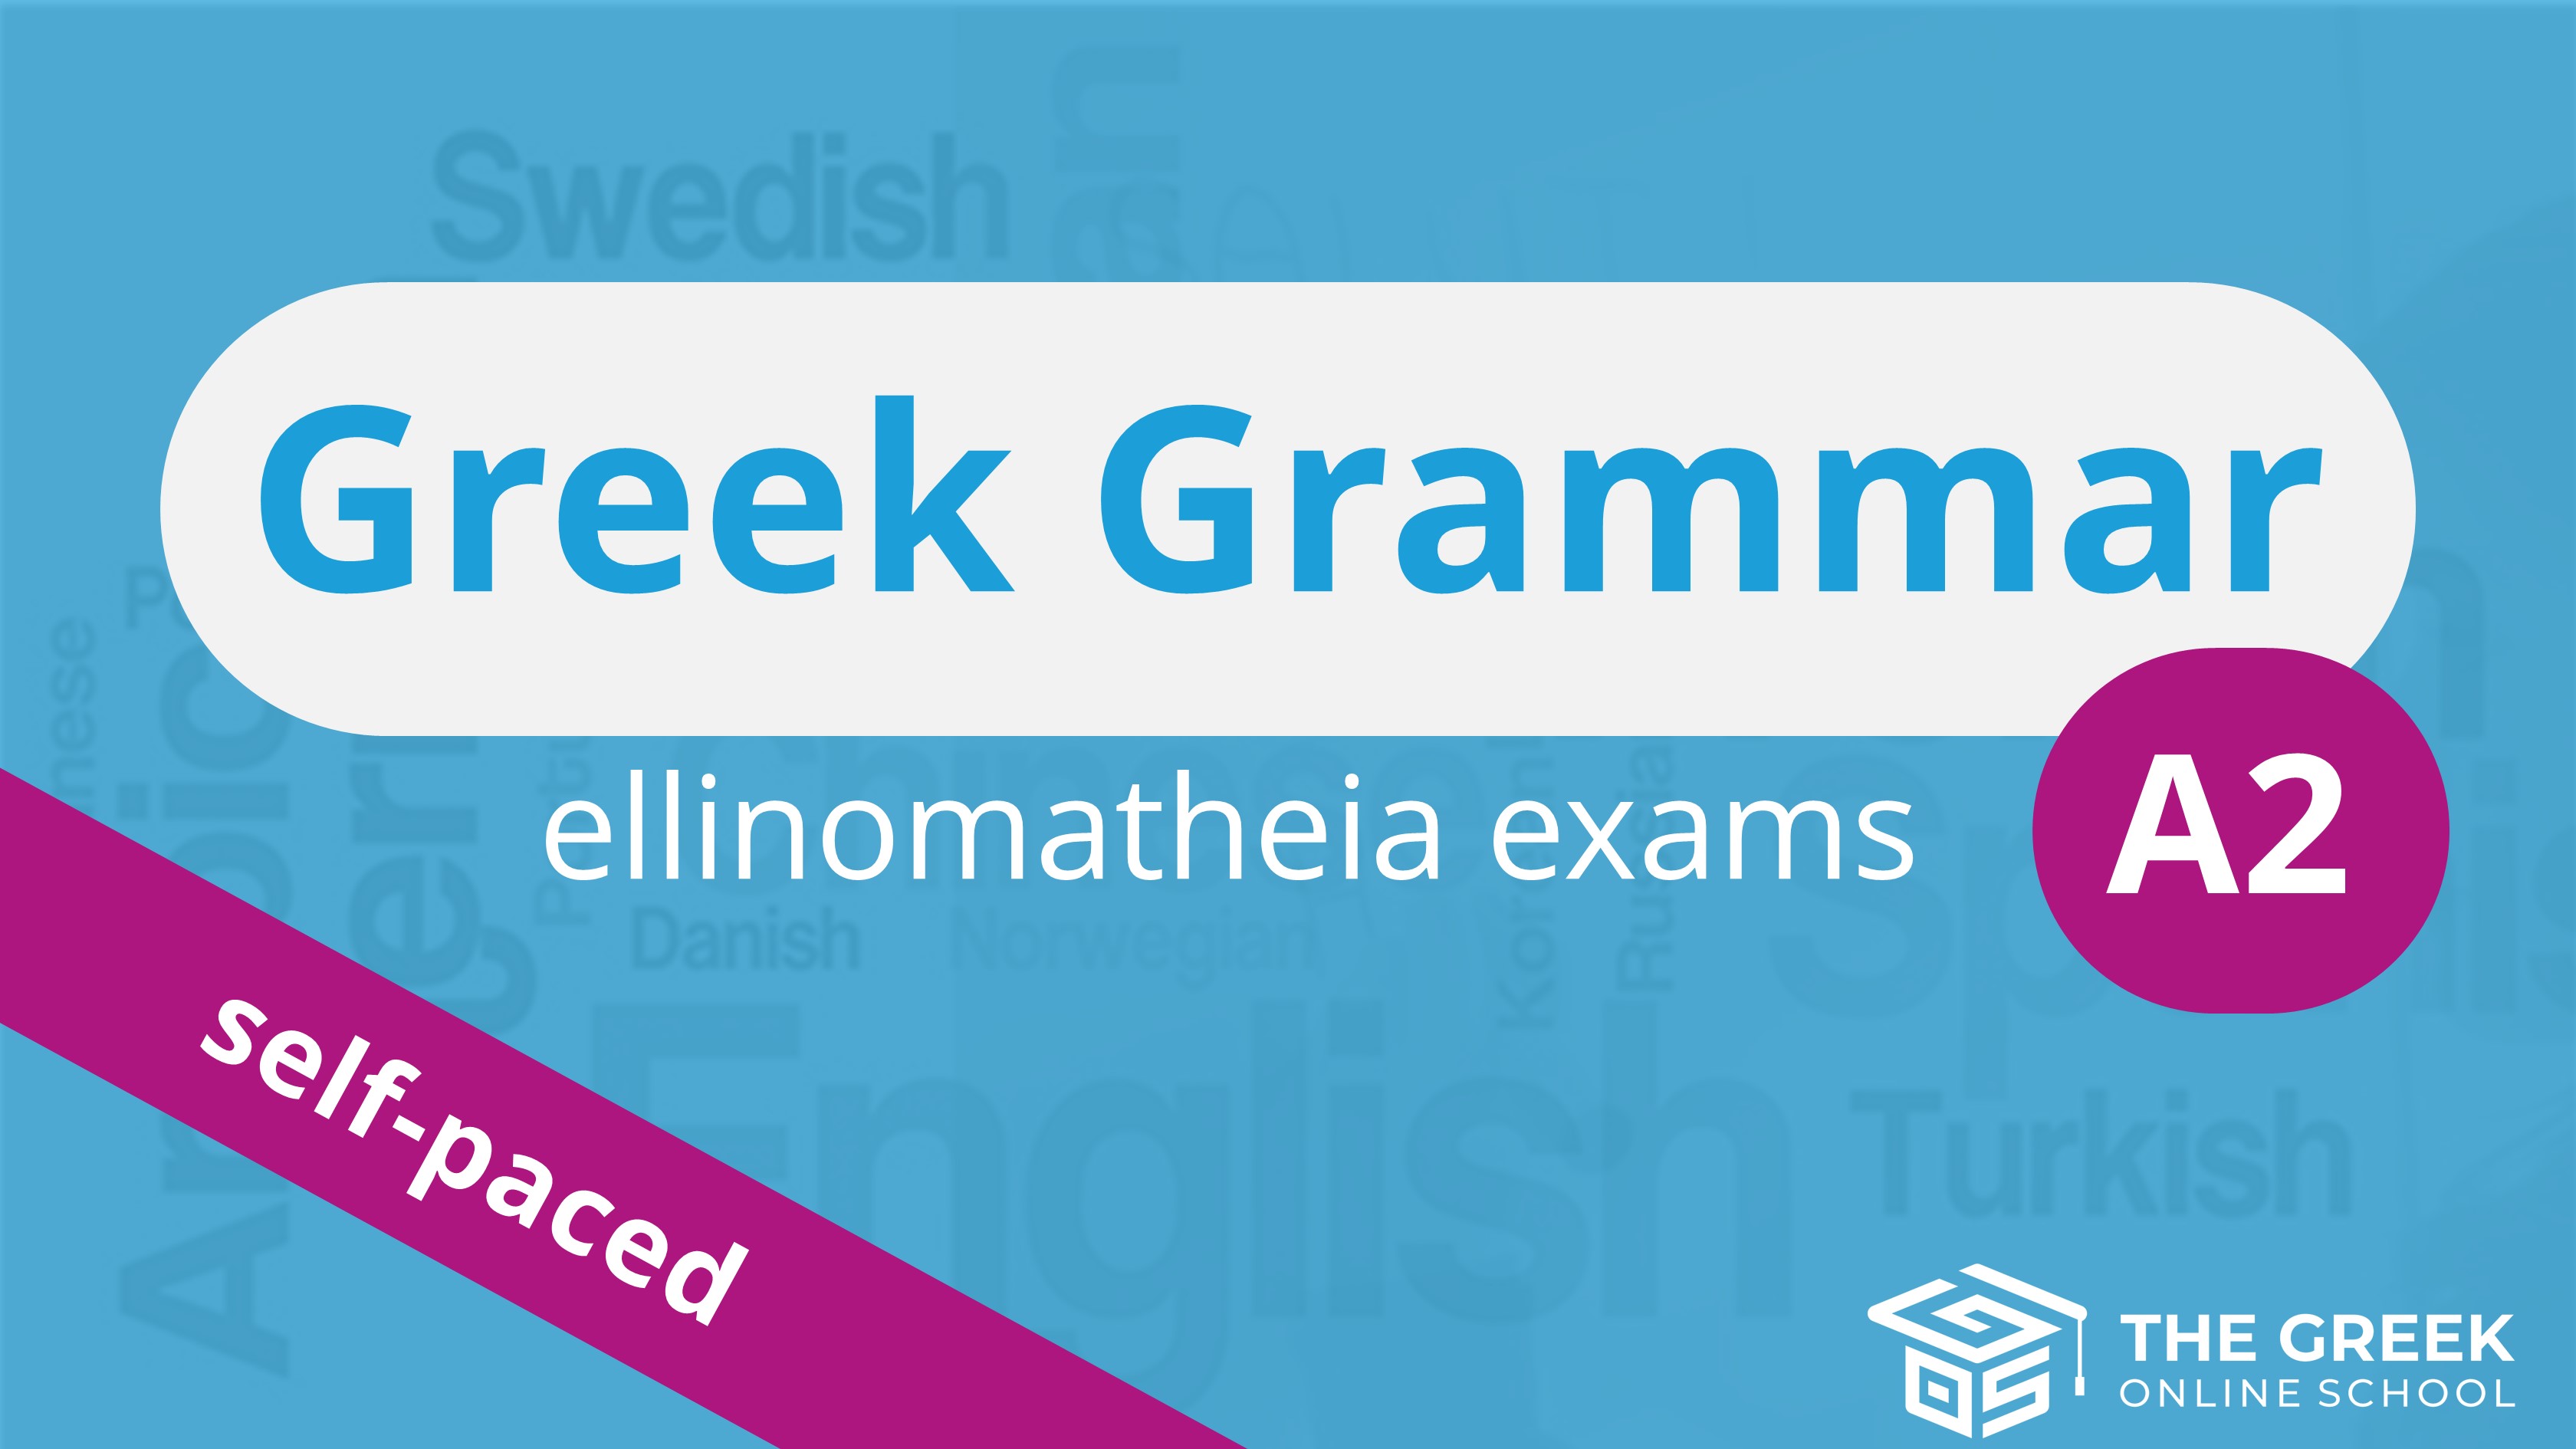 A2 Greek Grammar | self-paced A2